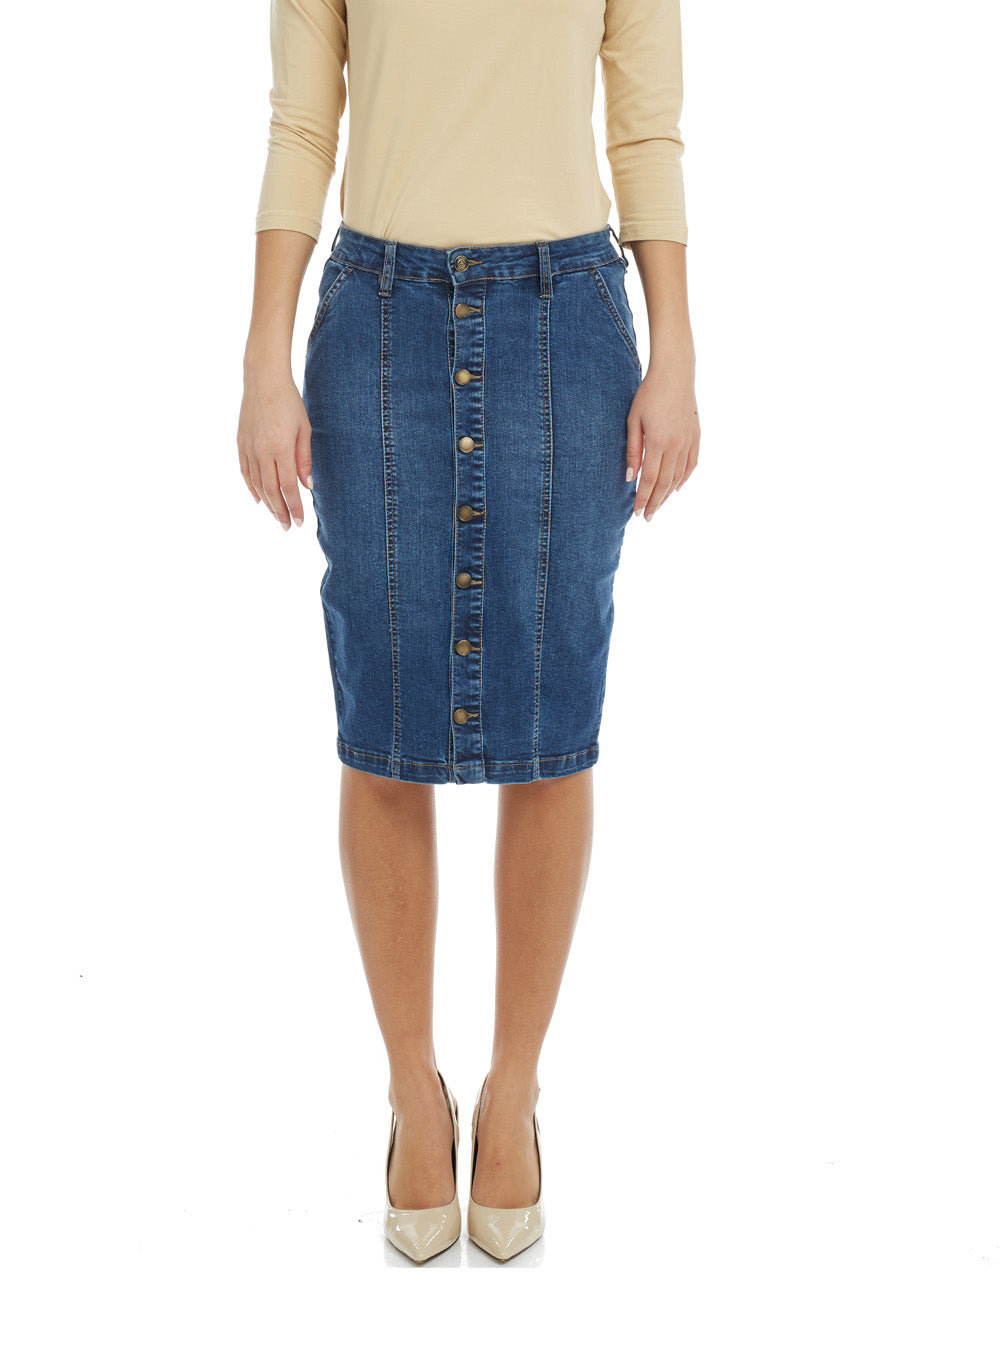 Below Knee Length Jean Pencil Skirt 'Montreal' EX802144